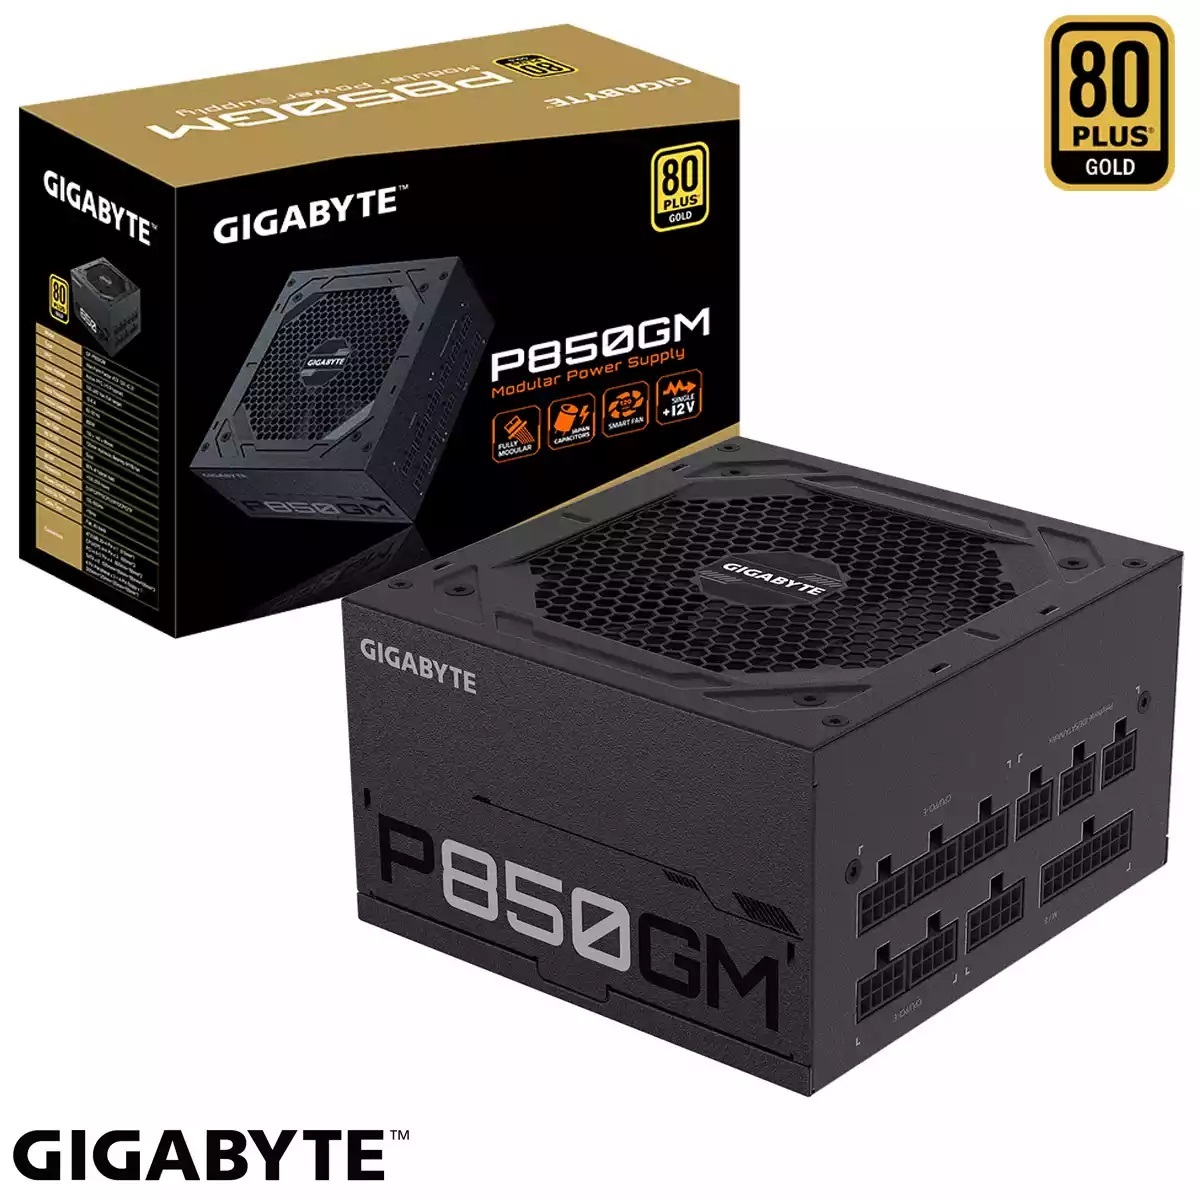 Nguồn - Power Supply Gigabyte GP-P850GM 80 Plus Gold - 850W